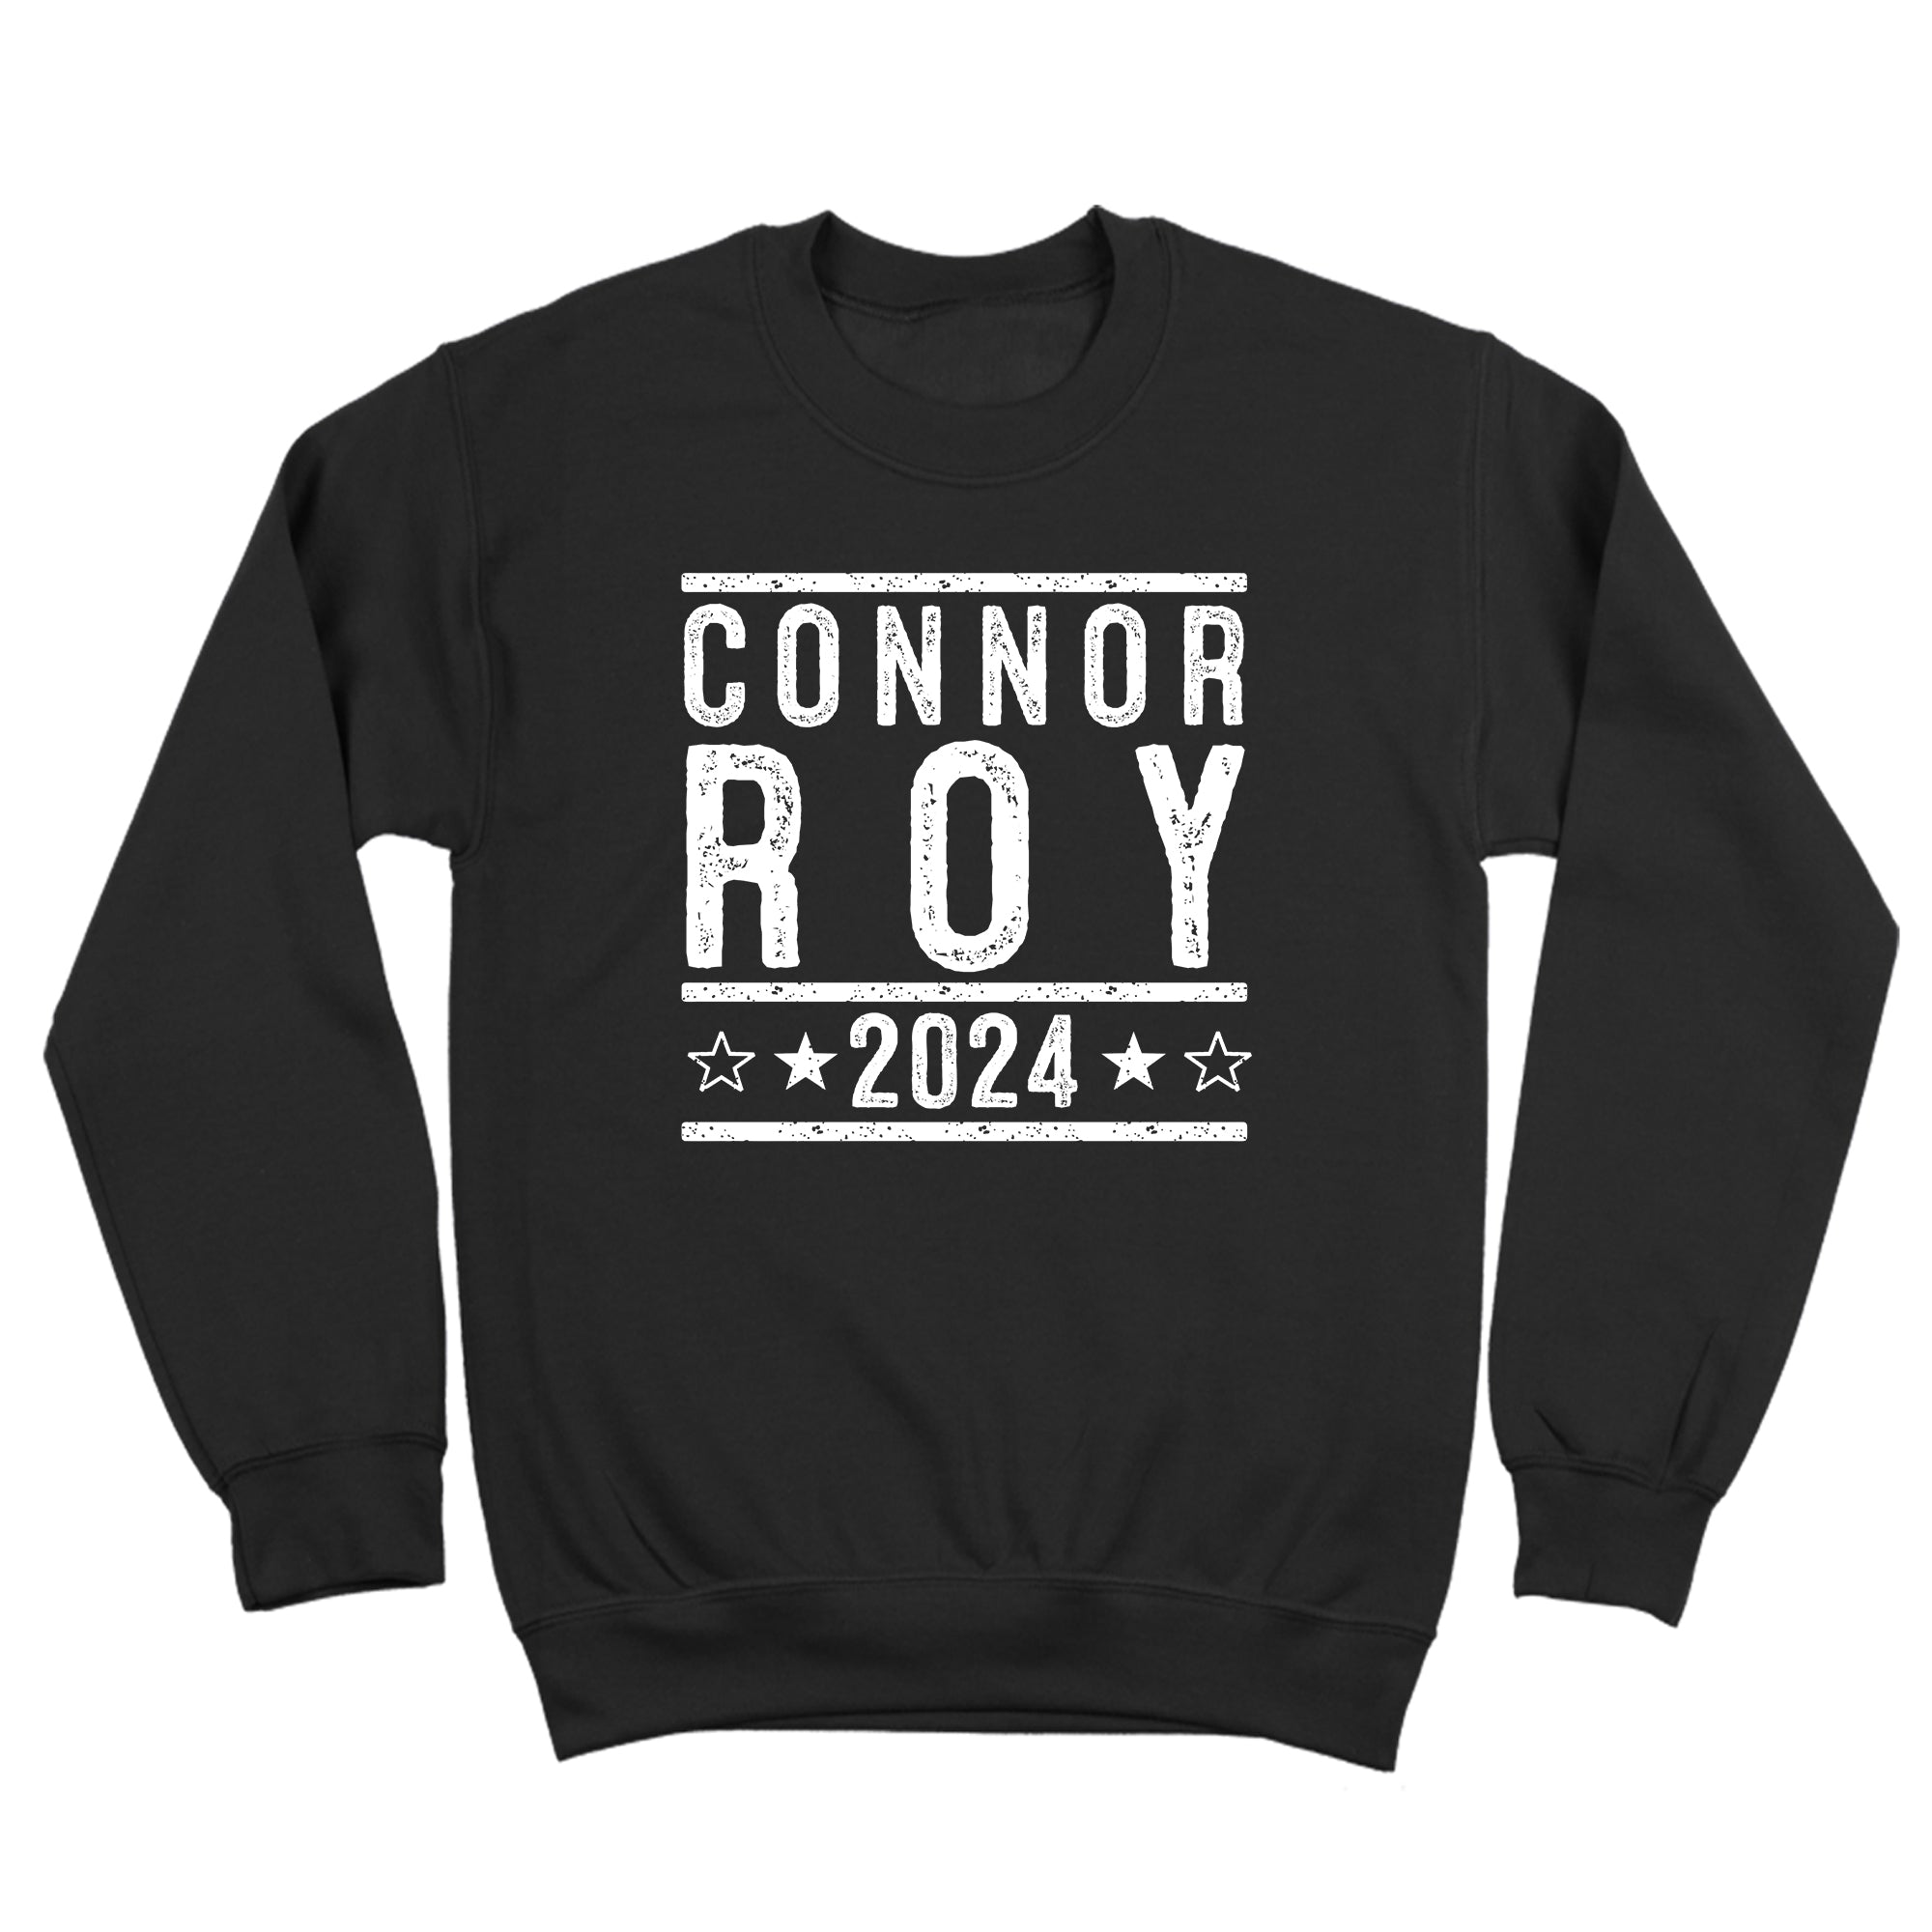 Connor Roy 2024 Election Tshirt - Donkey Tees